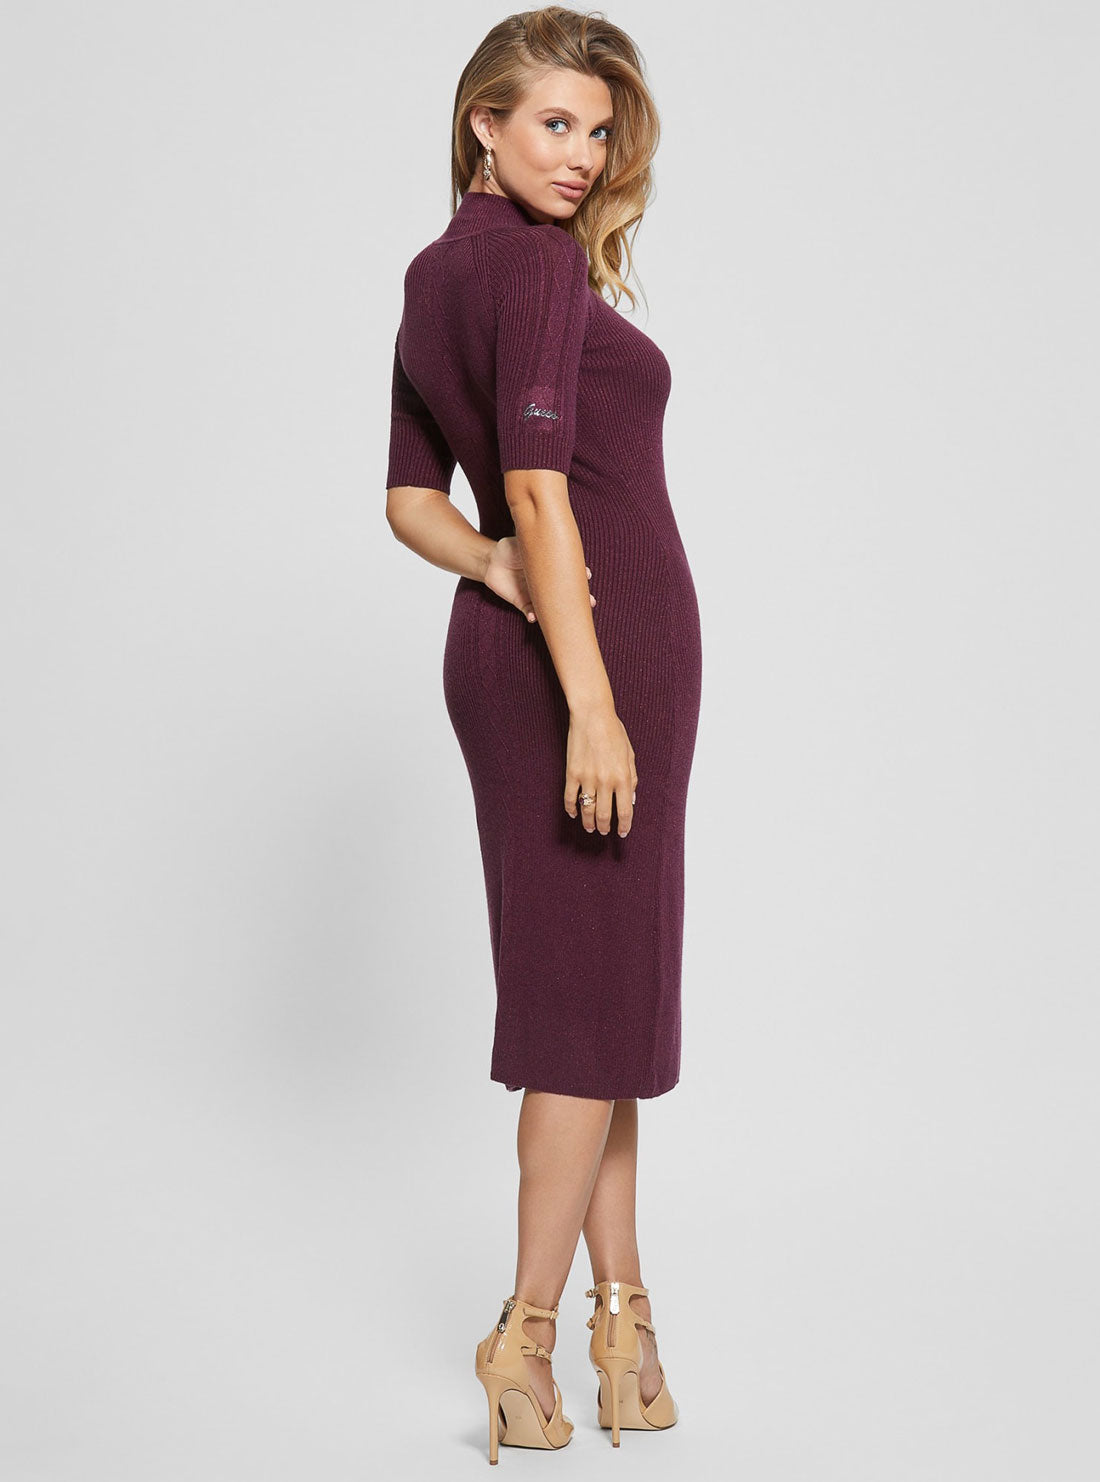 Maroon Arielle Knit Midi Dress | GUESS Women's Apparel | back view